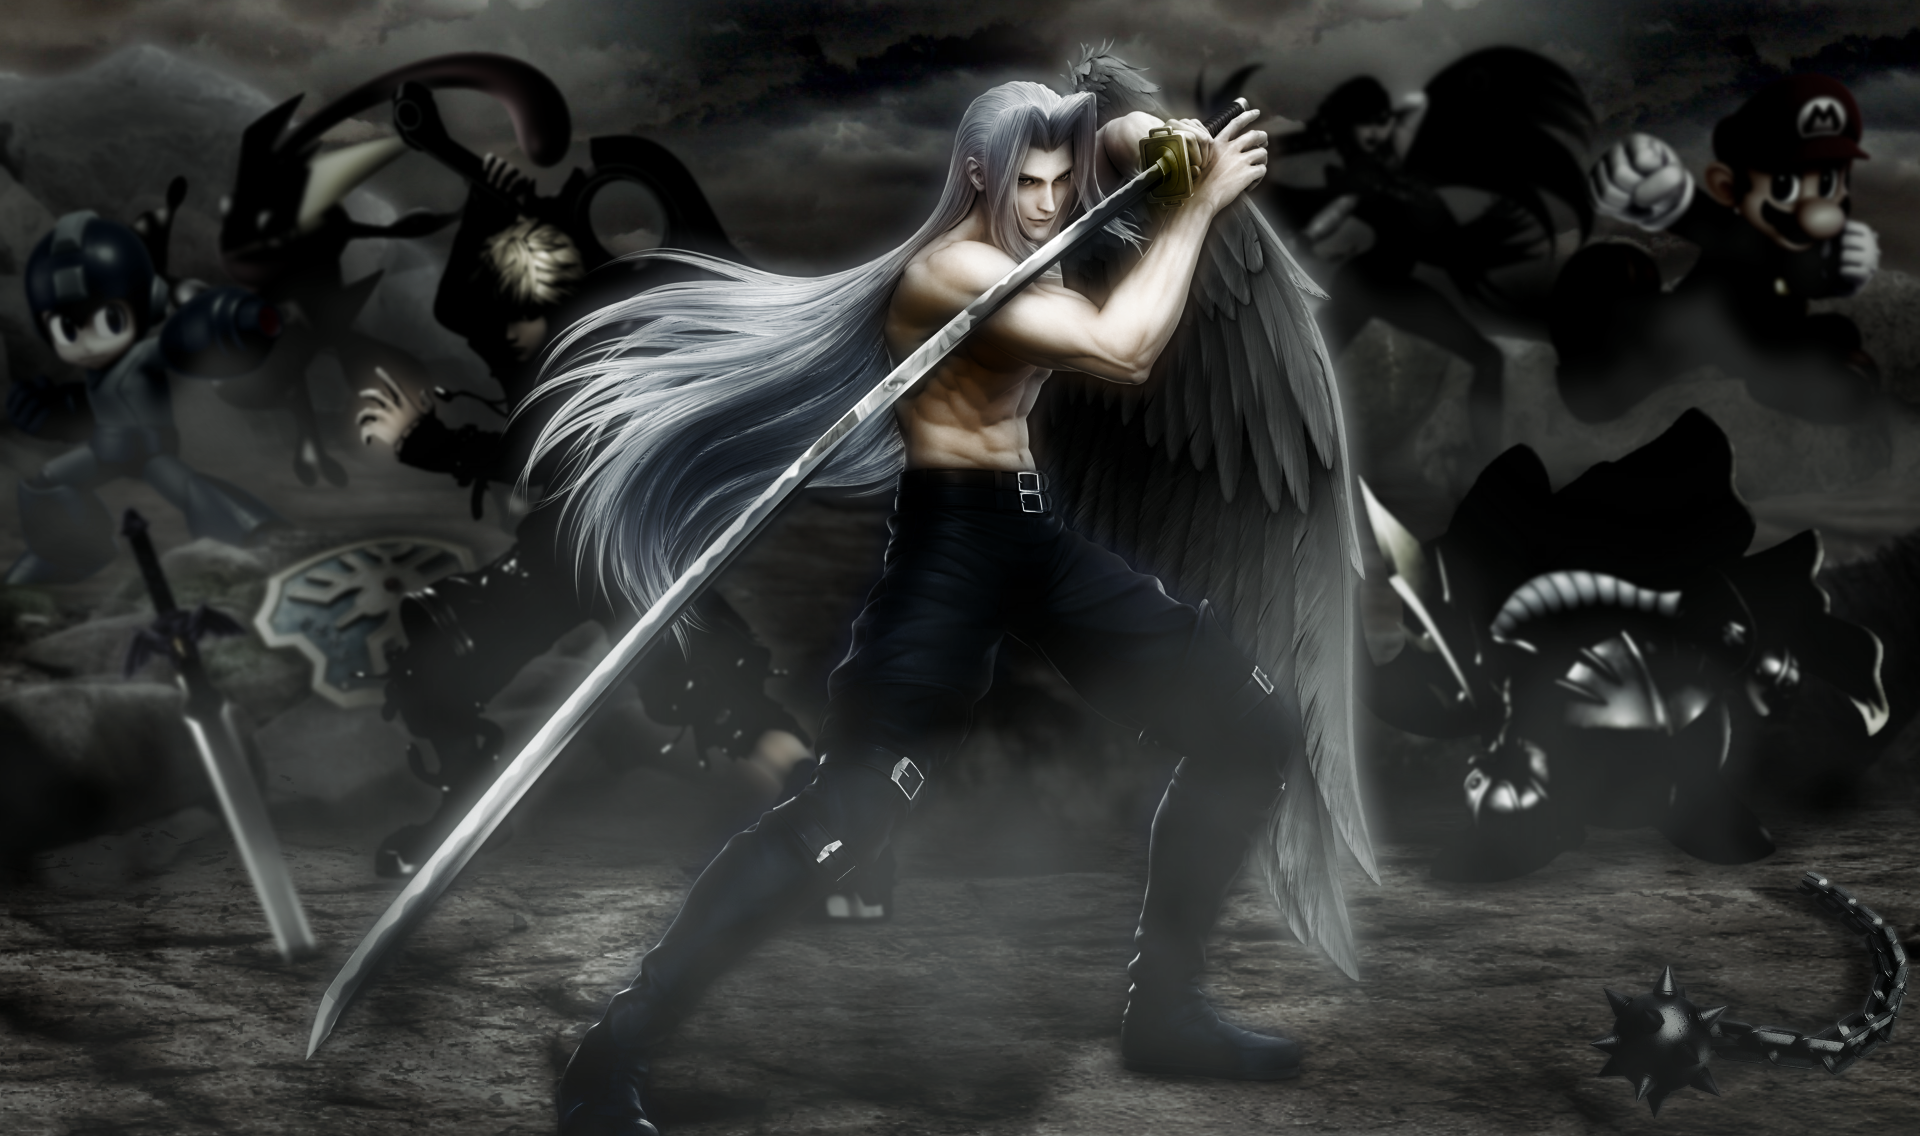 Sephiroth Super Smash Bros Wallpapers